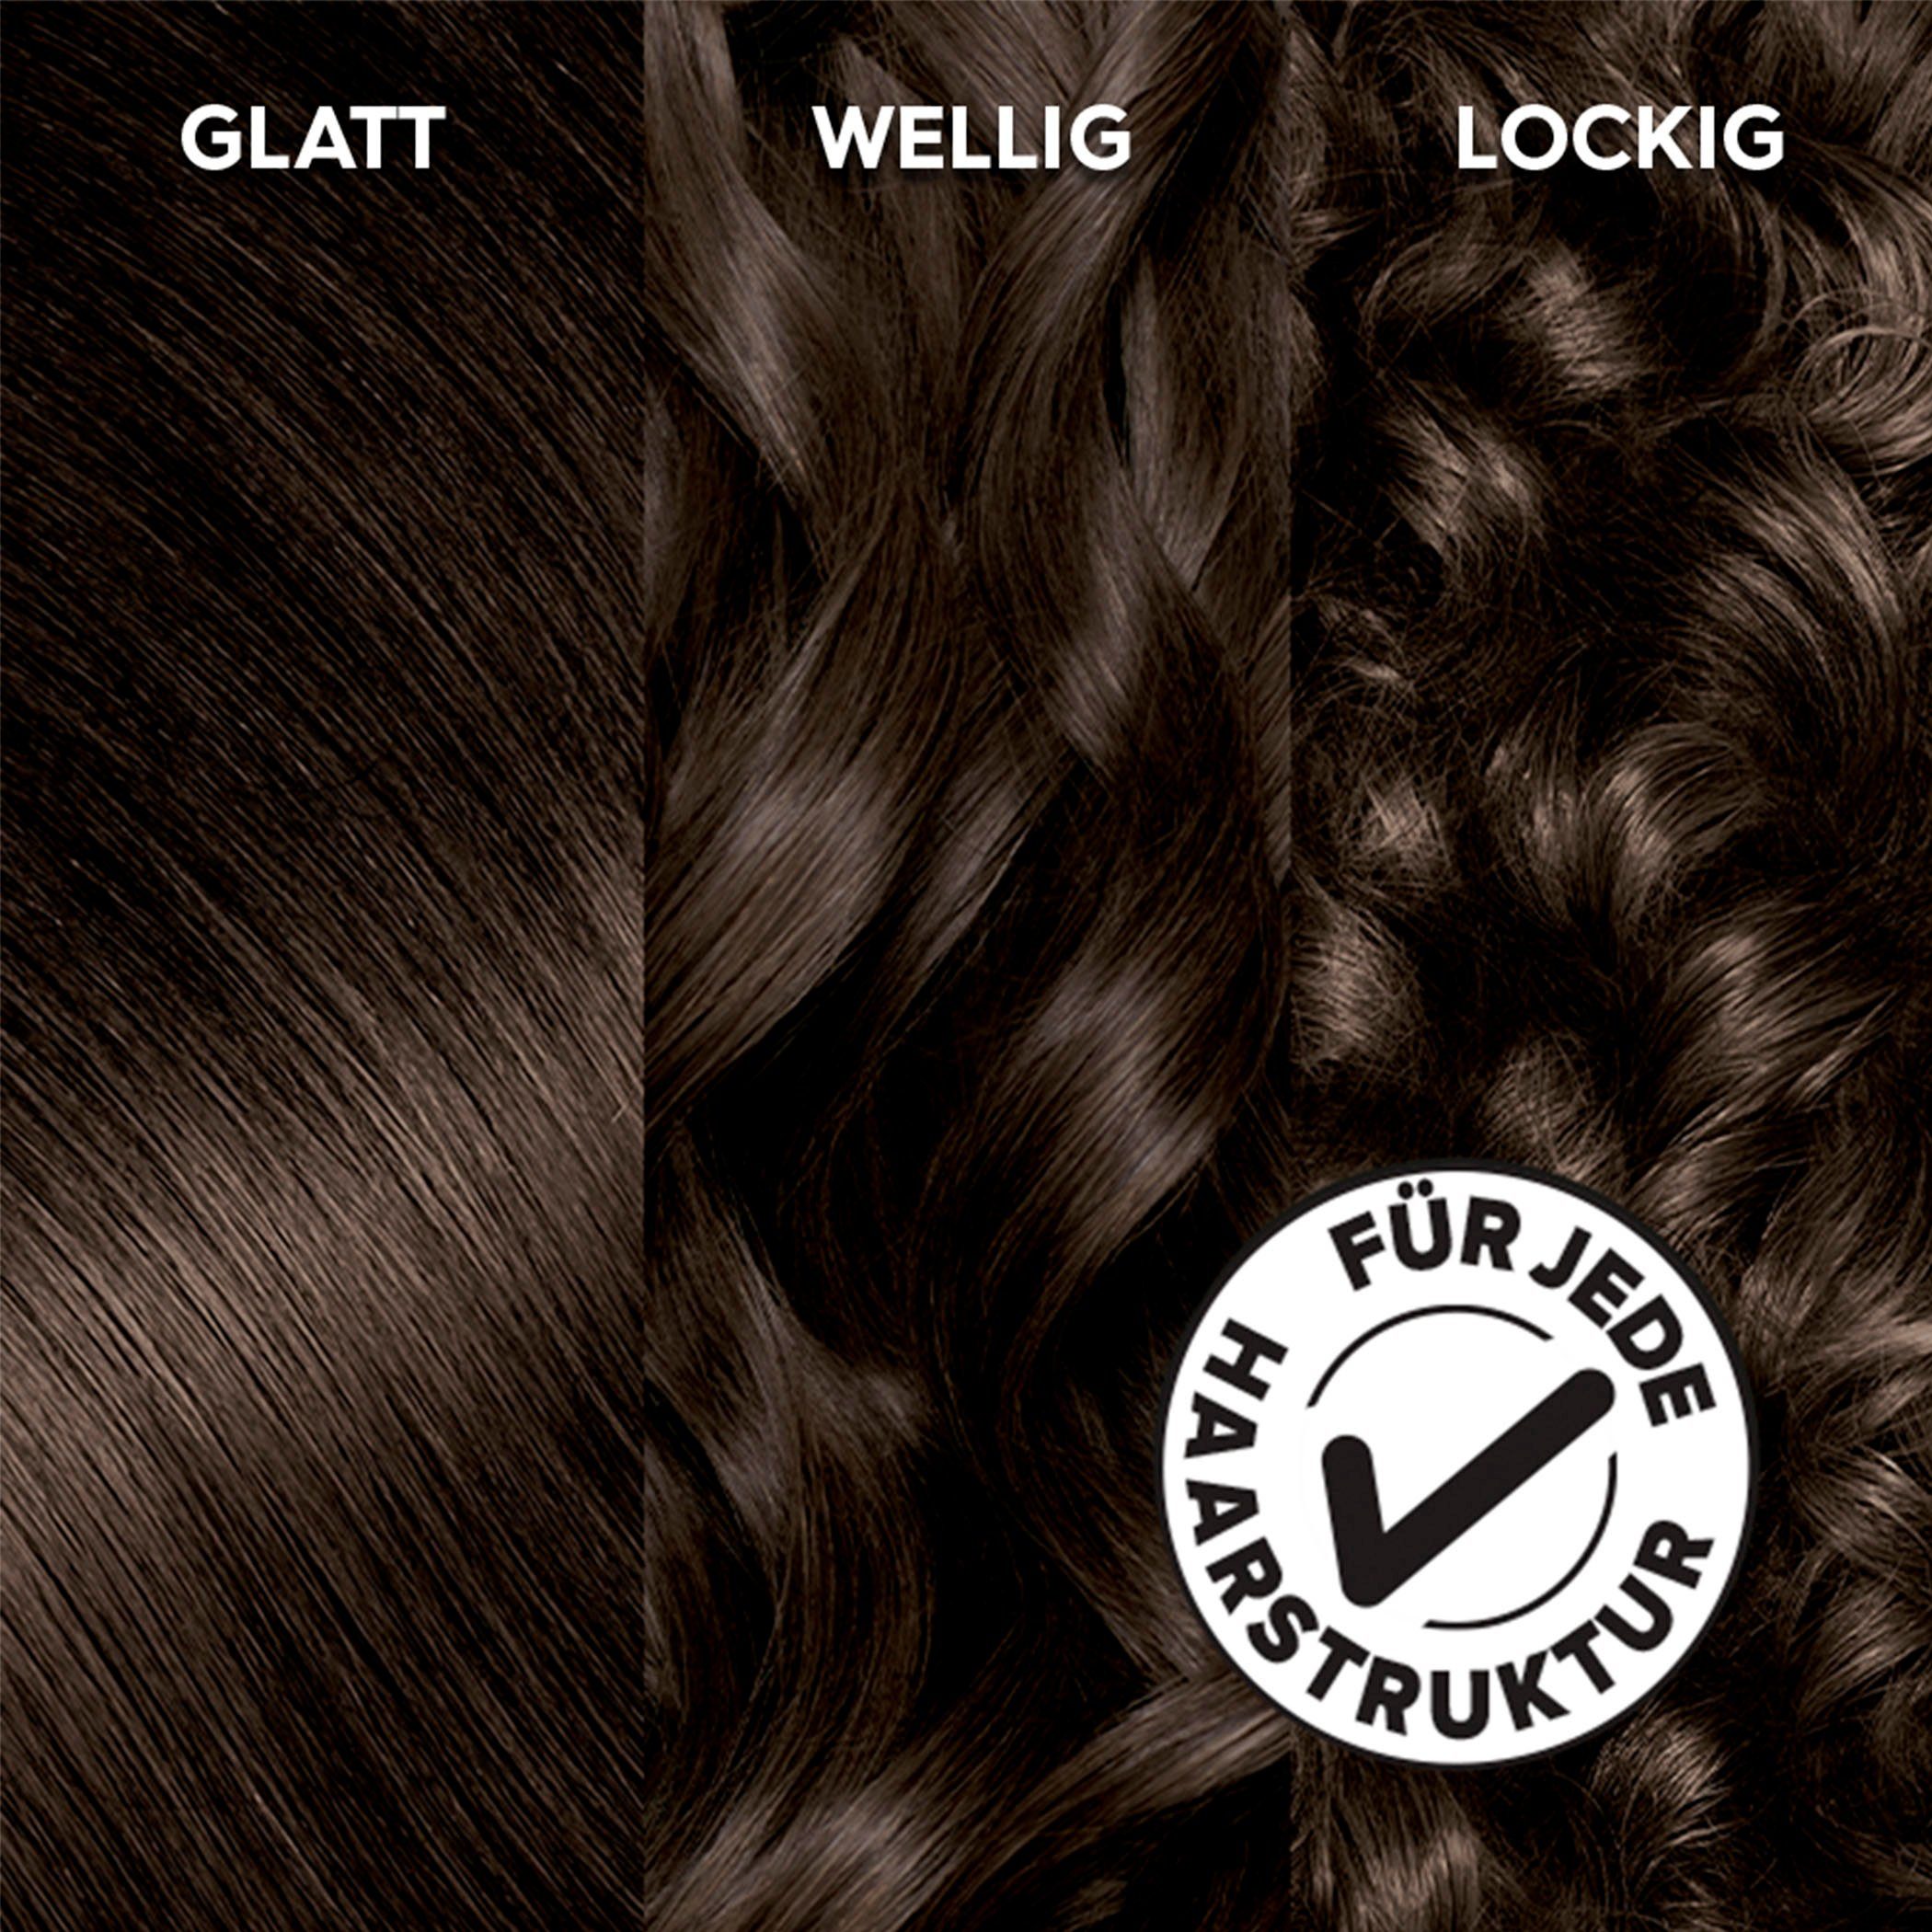 Haarfarbe, GARNIER Garnier Olia 3-tlg., dauerhafte Set, Ölbasis Coloration